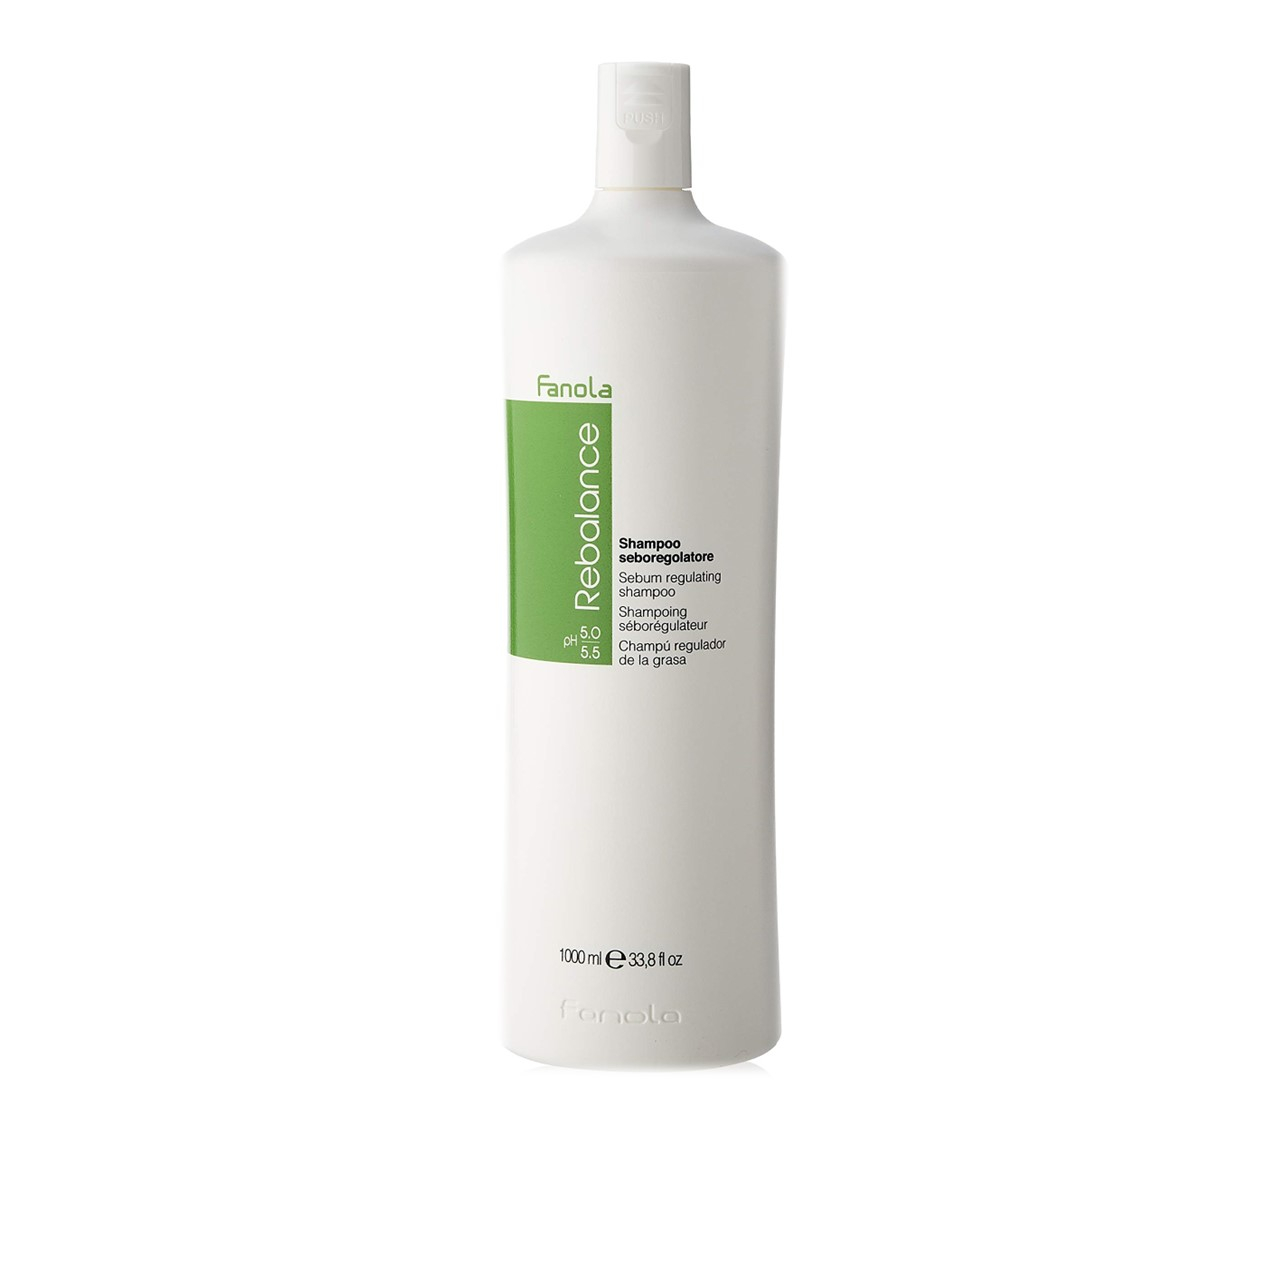 Fanola Rebalance Sebum Regulating Shampoo 1L (33.8 fl oz)